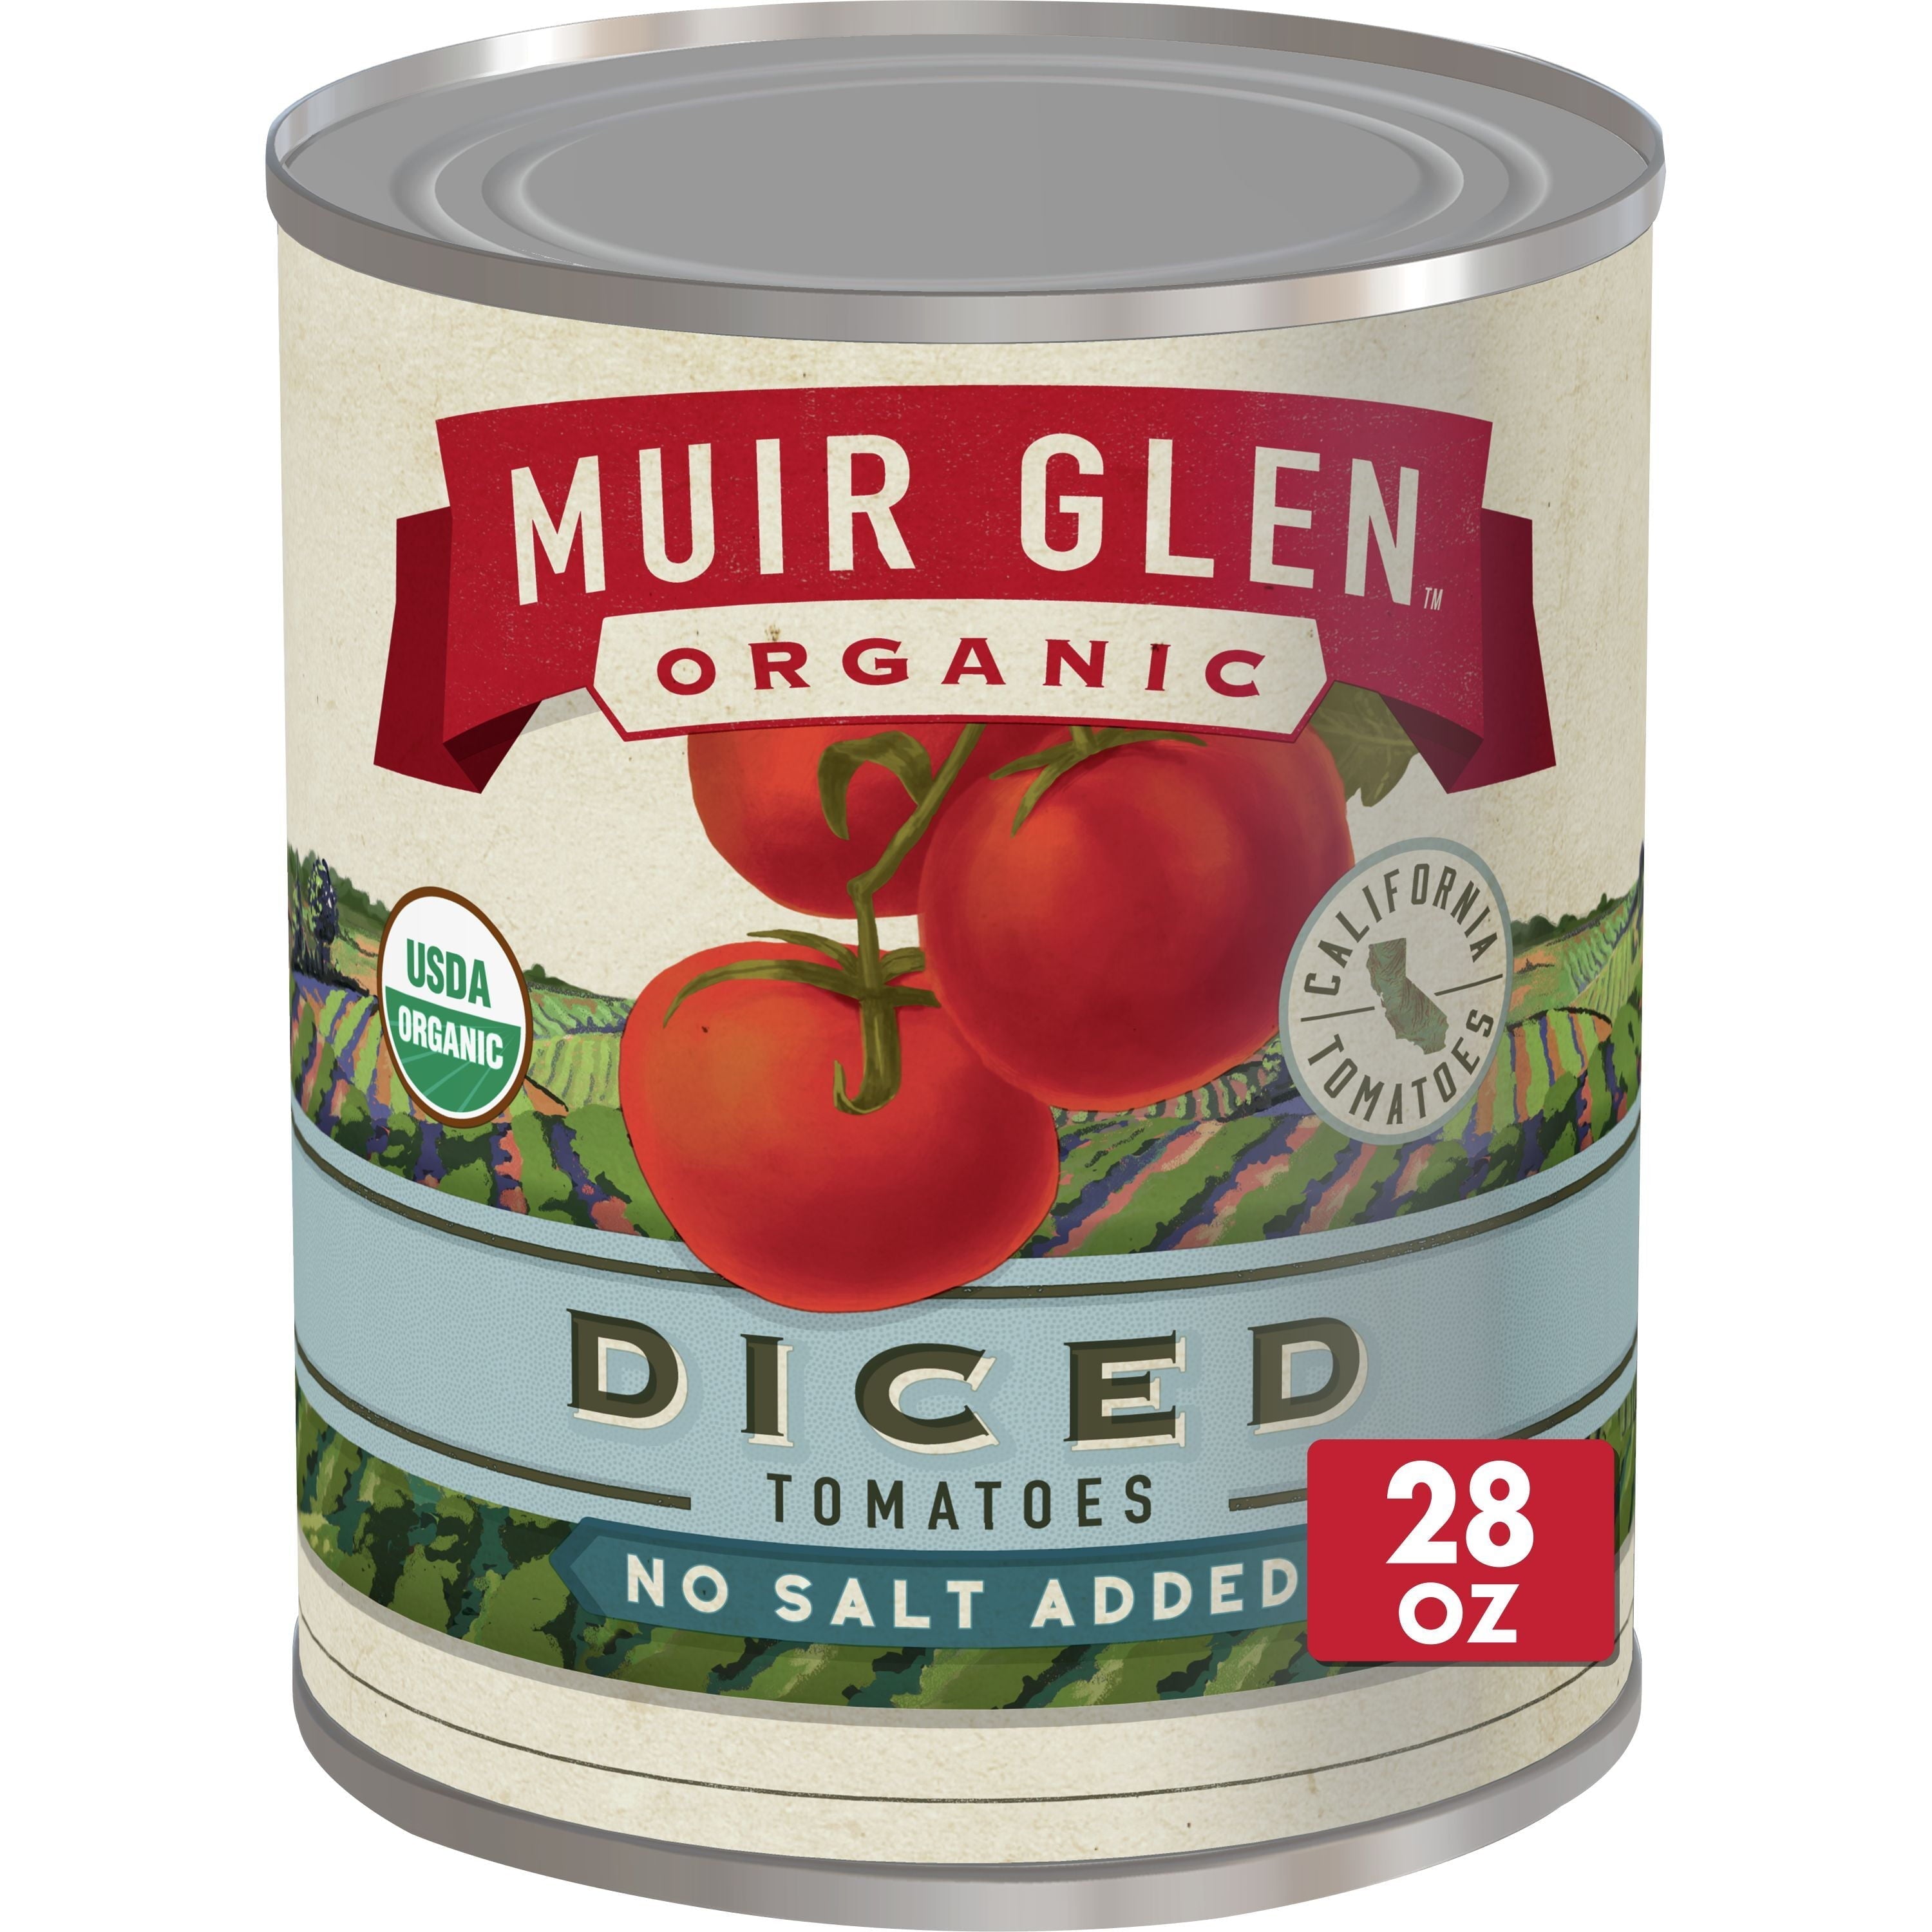 Muir Glen Organic Tomatoes Diced No Salt 28 Oz